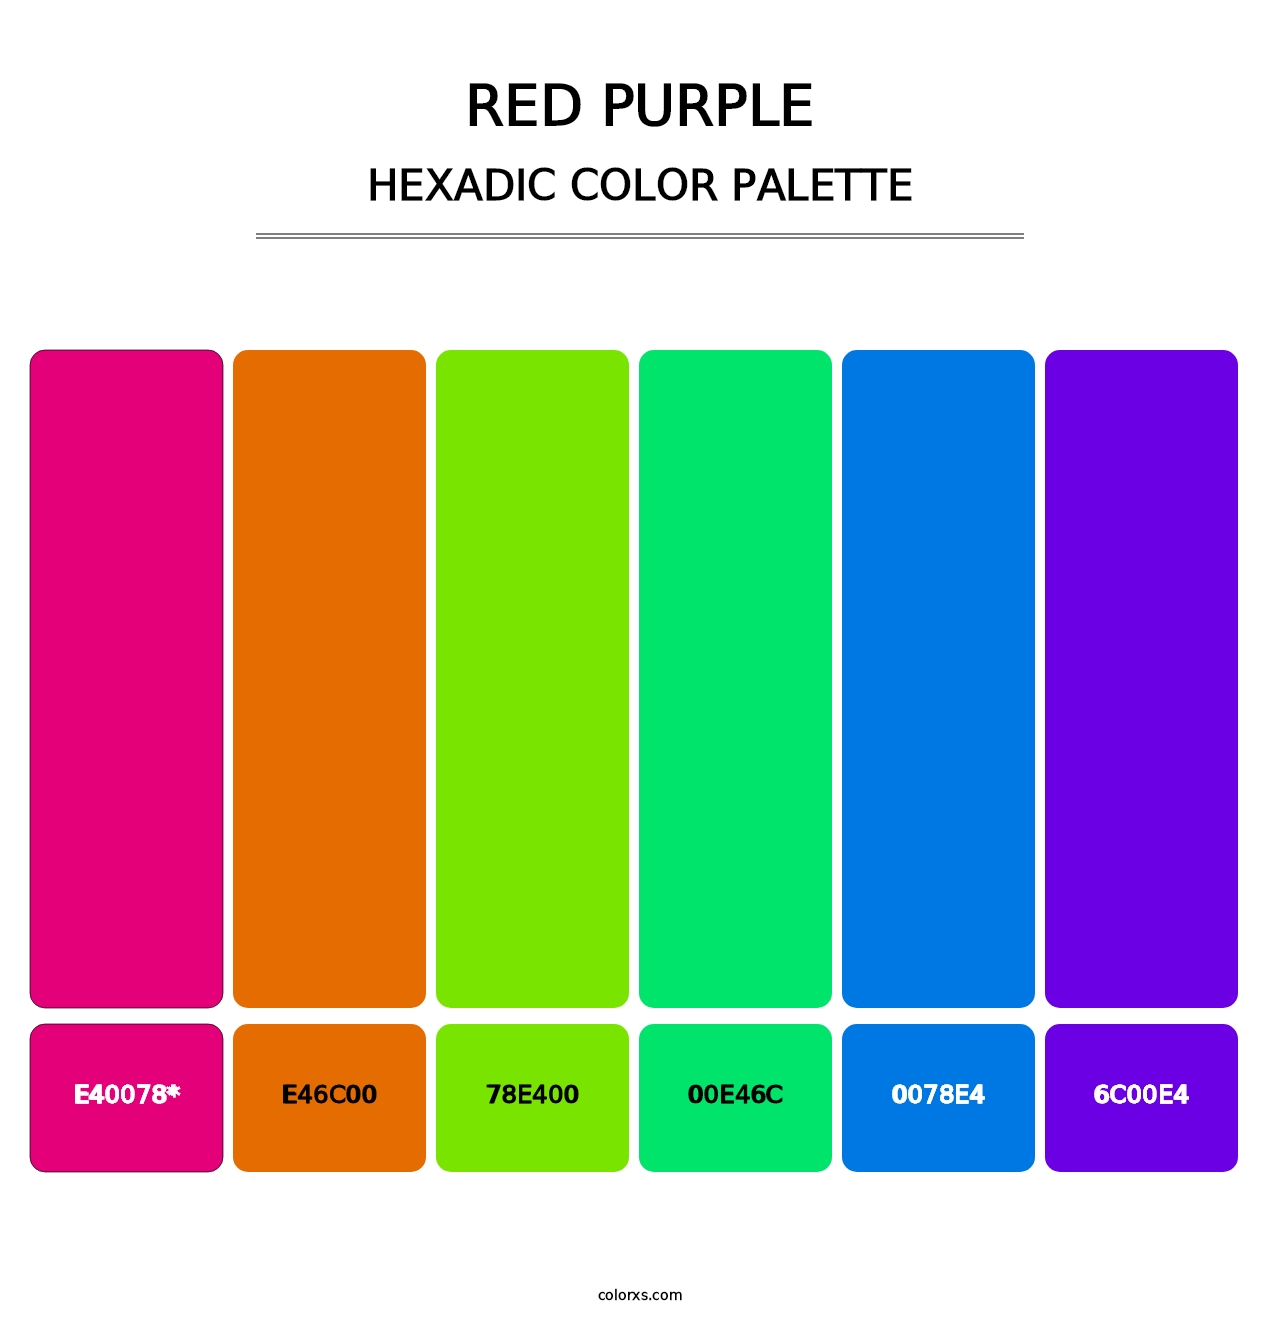 Red Purple - Hexadic Color Palette